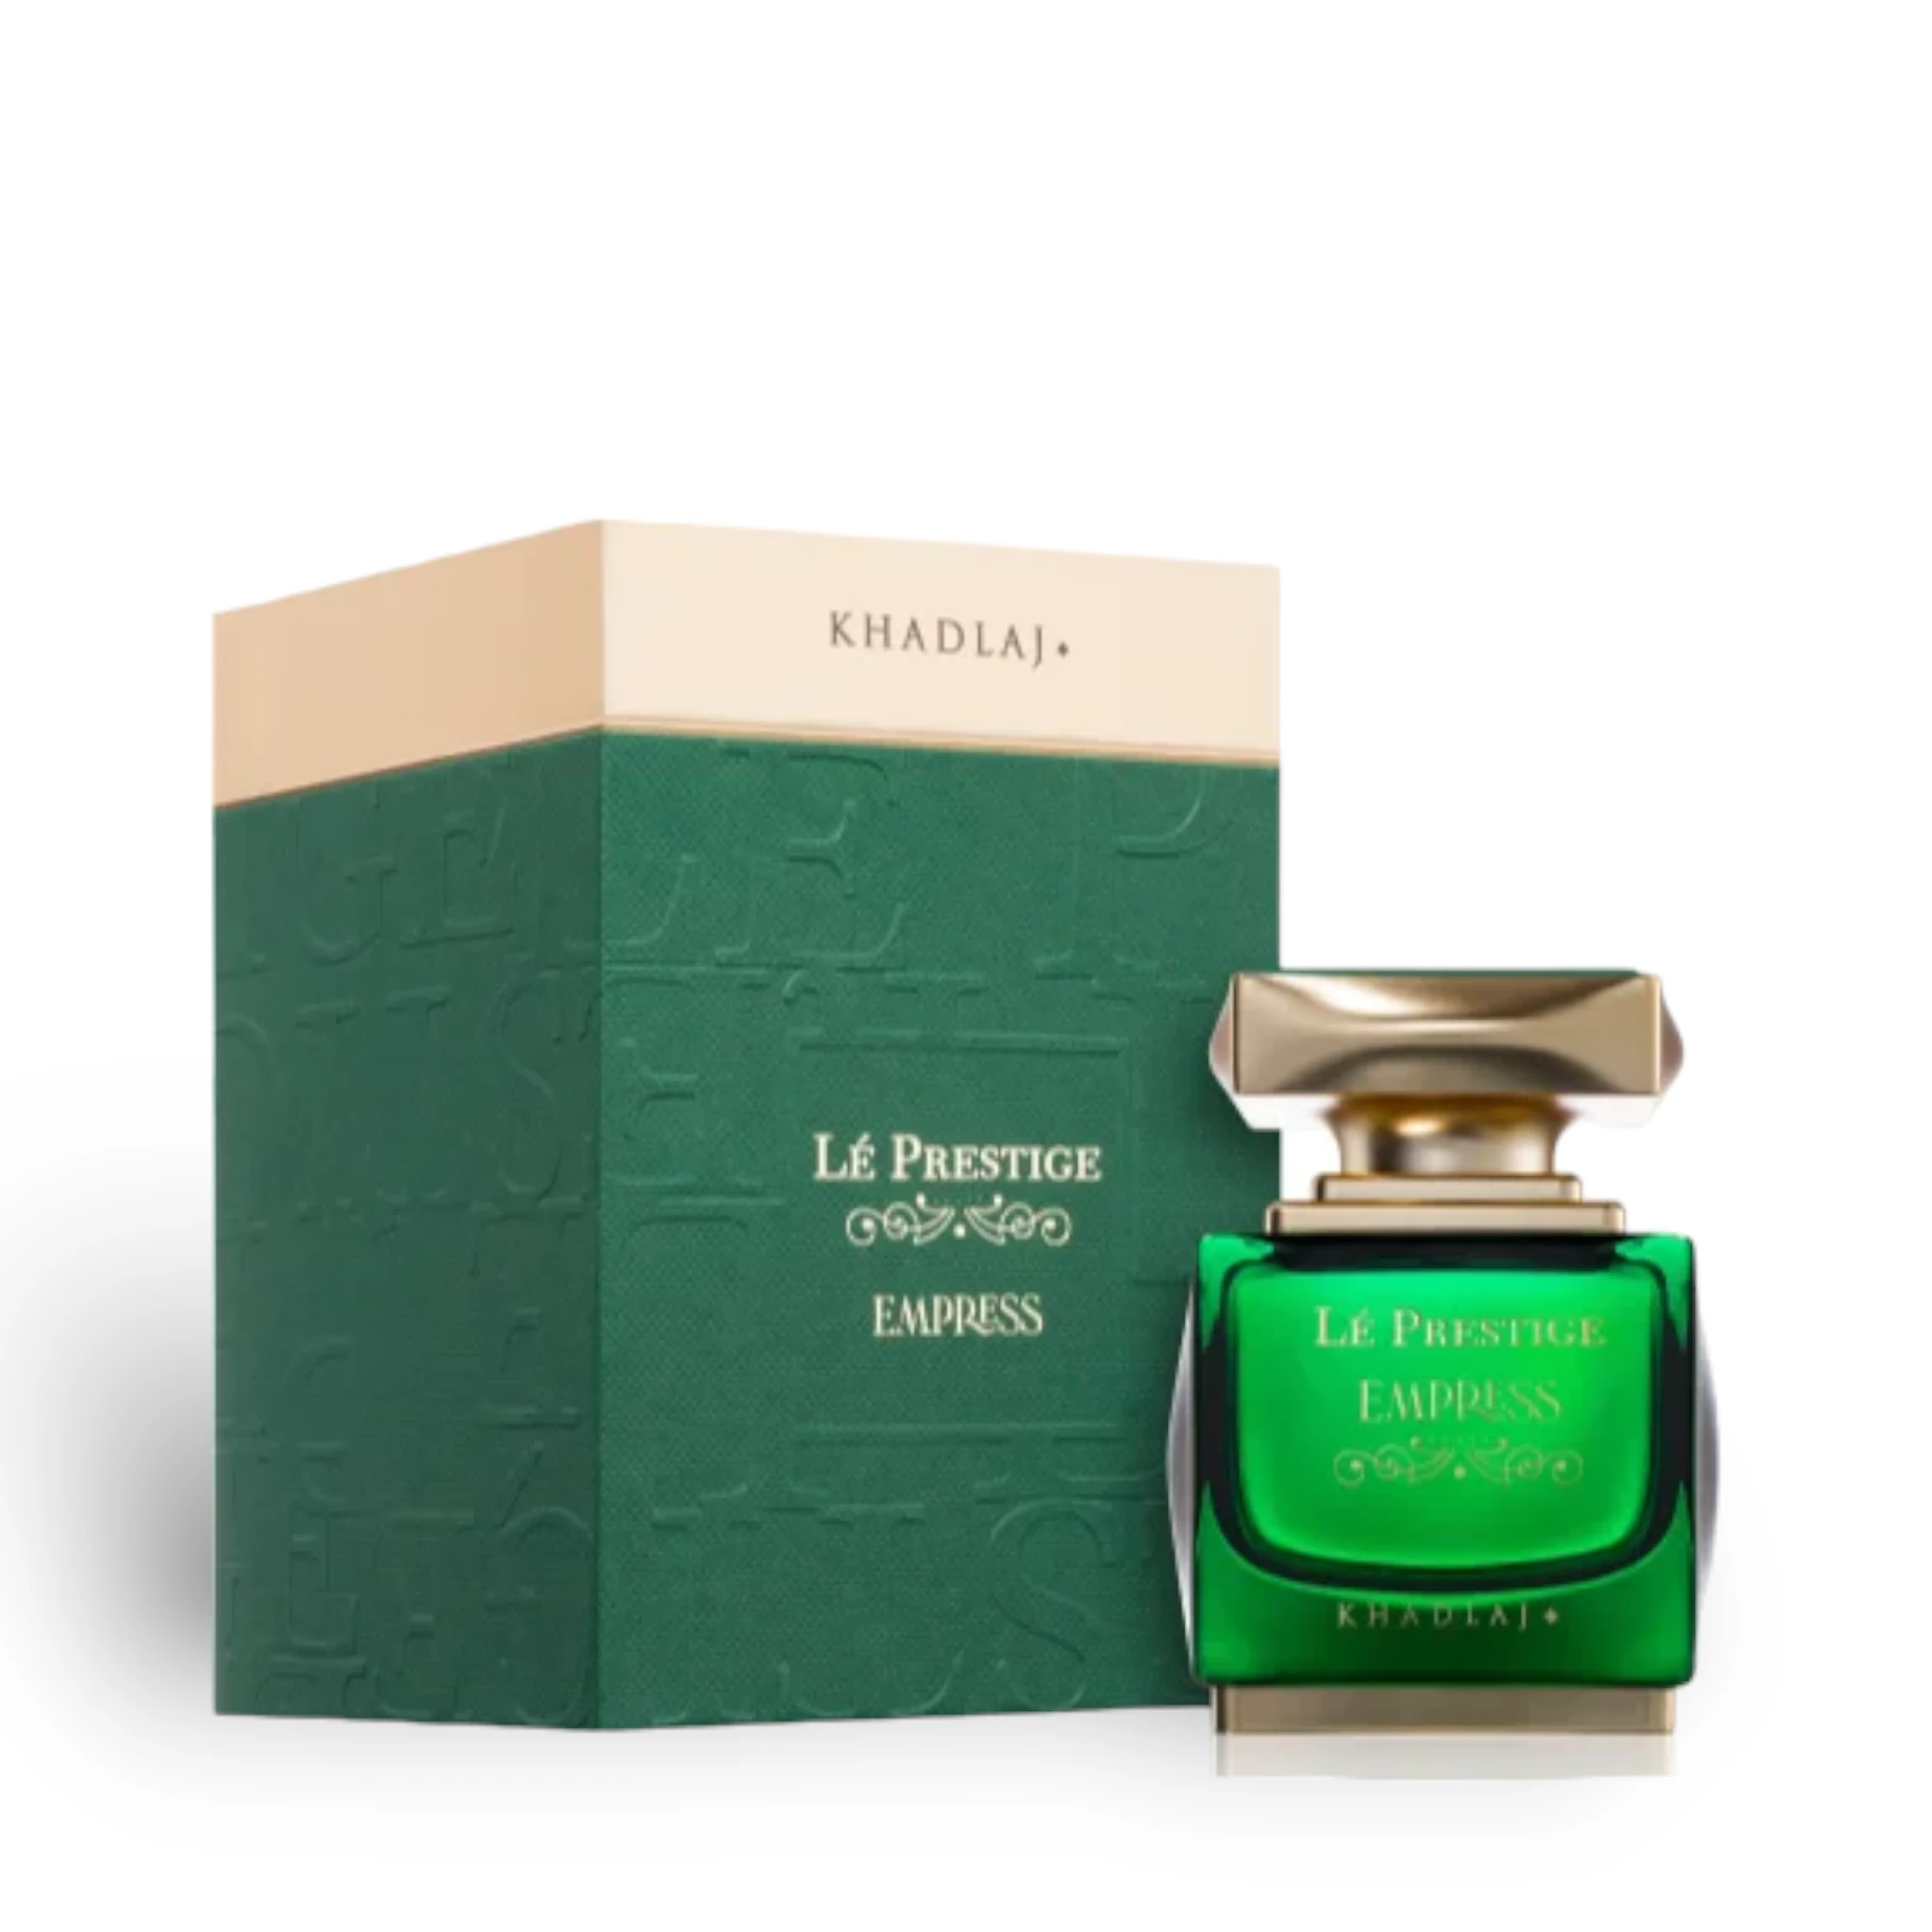 Le Prestige Empress Perfume Eau De Parfum 100Ml By Khadlaj